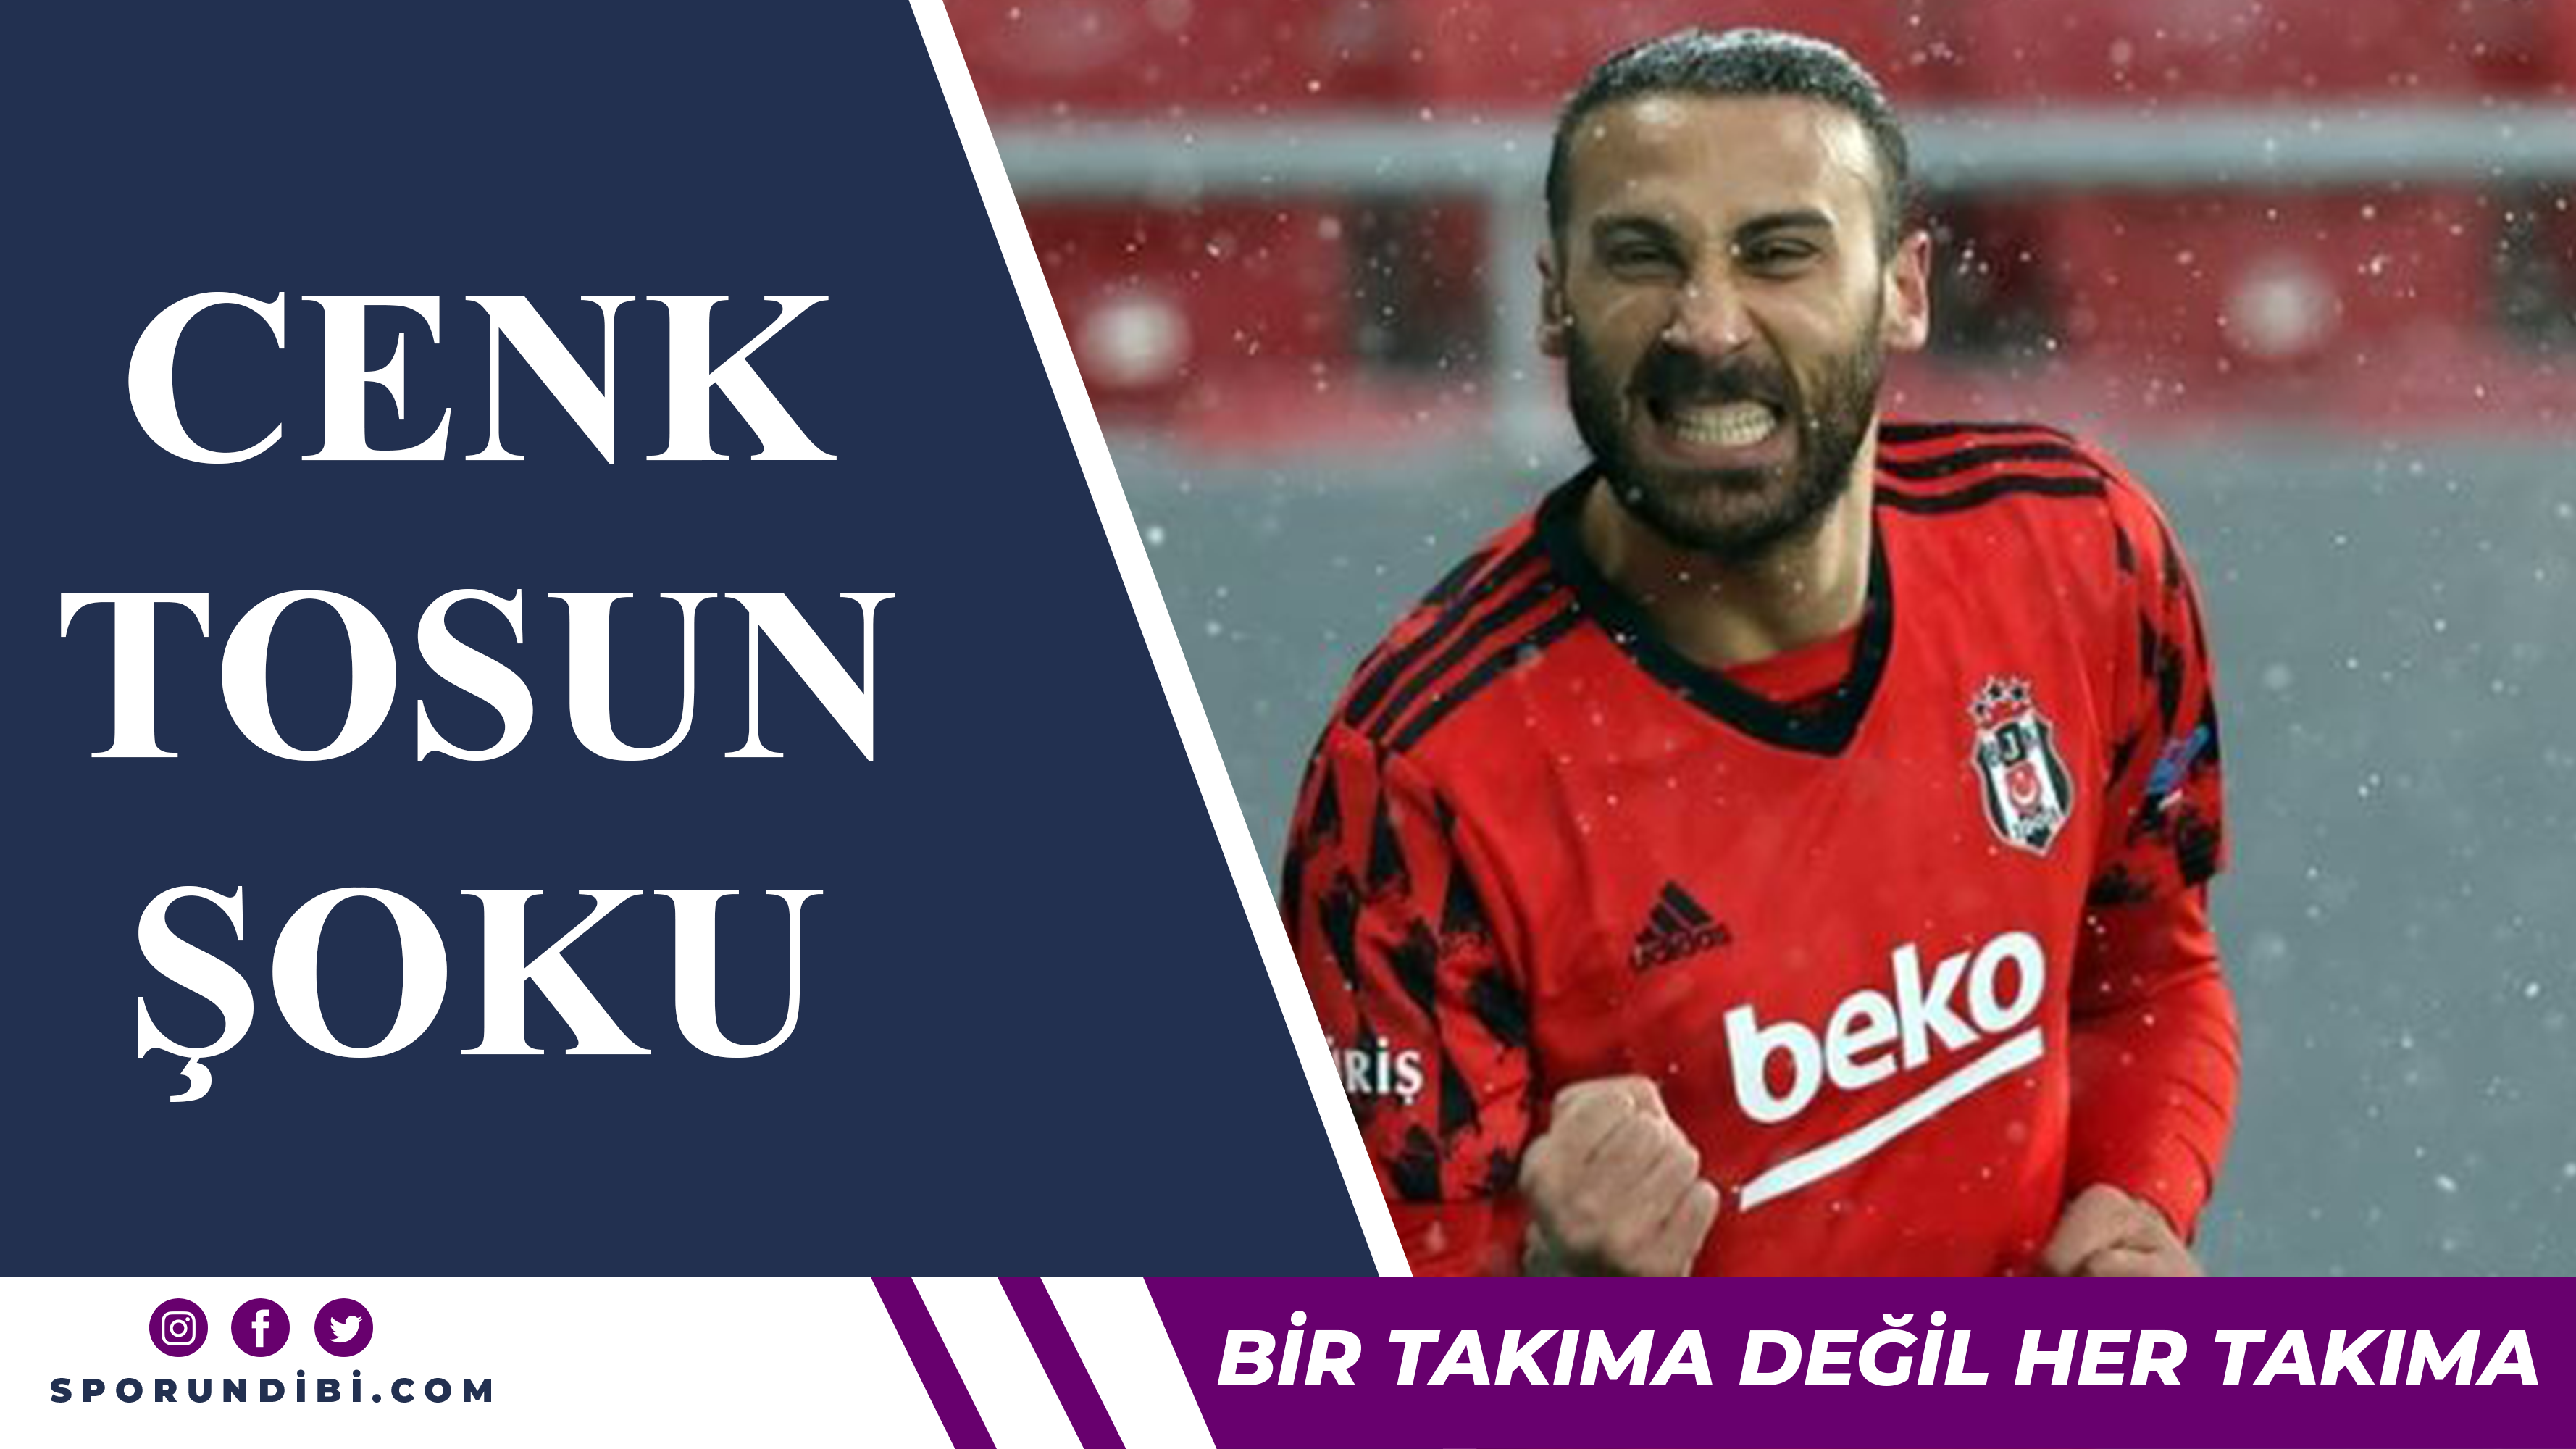 Beşiktaş'ta Cenk Tosun şoku